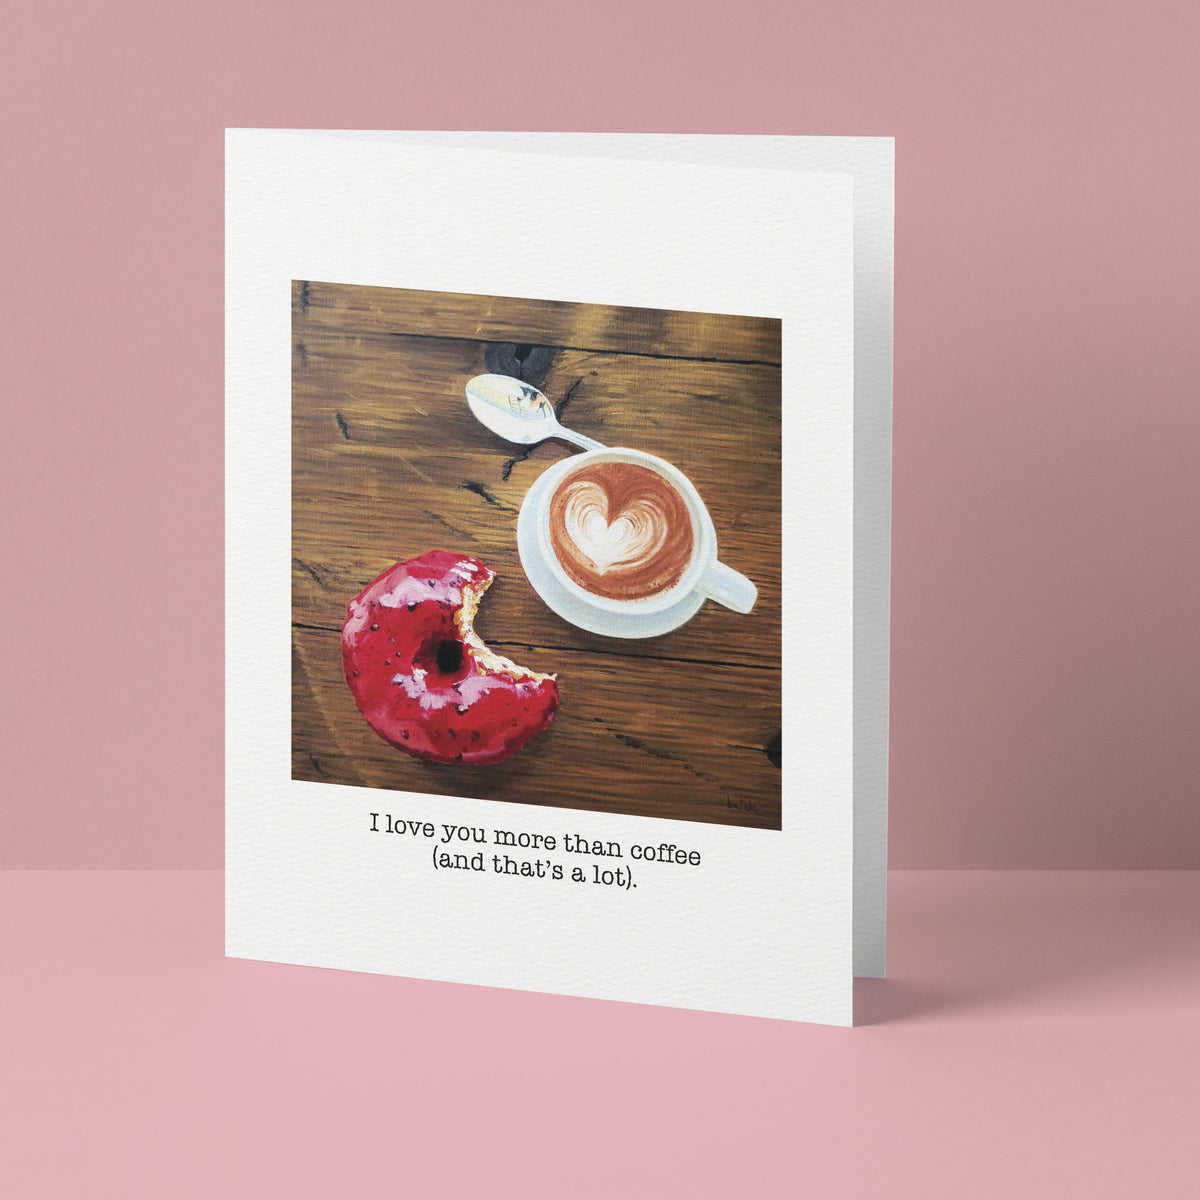 "I love you more than coffee" Greeting Card